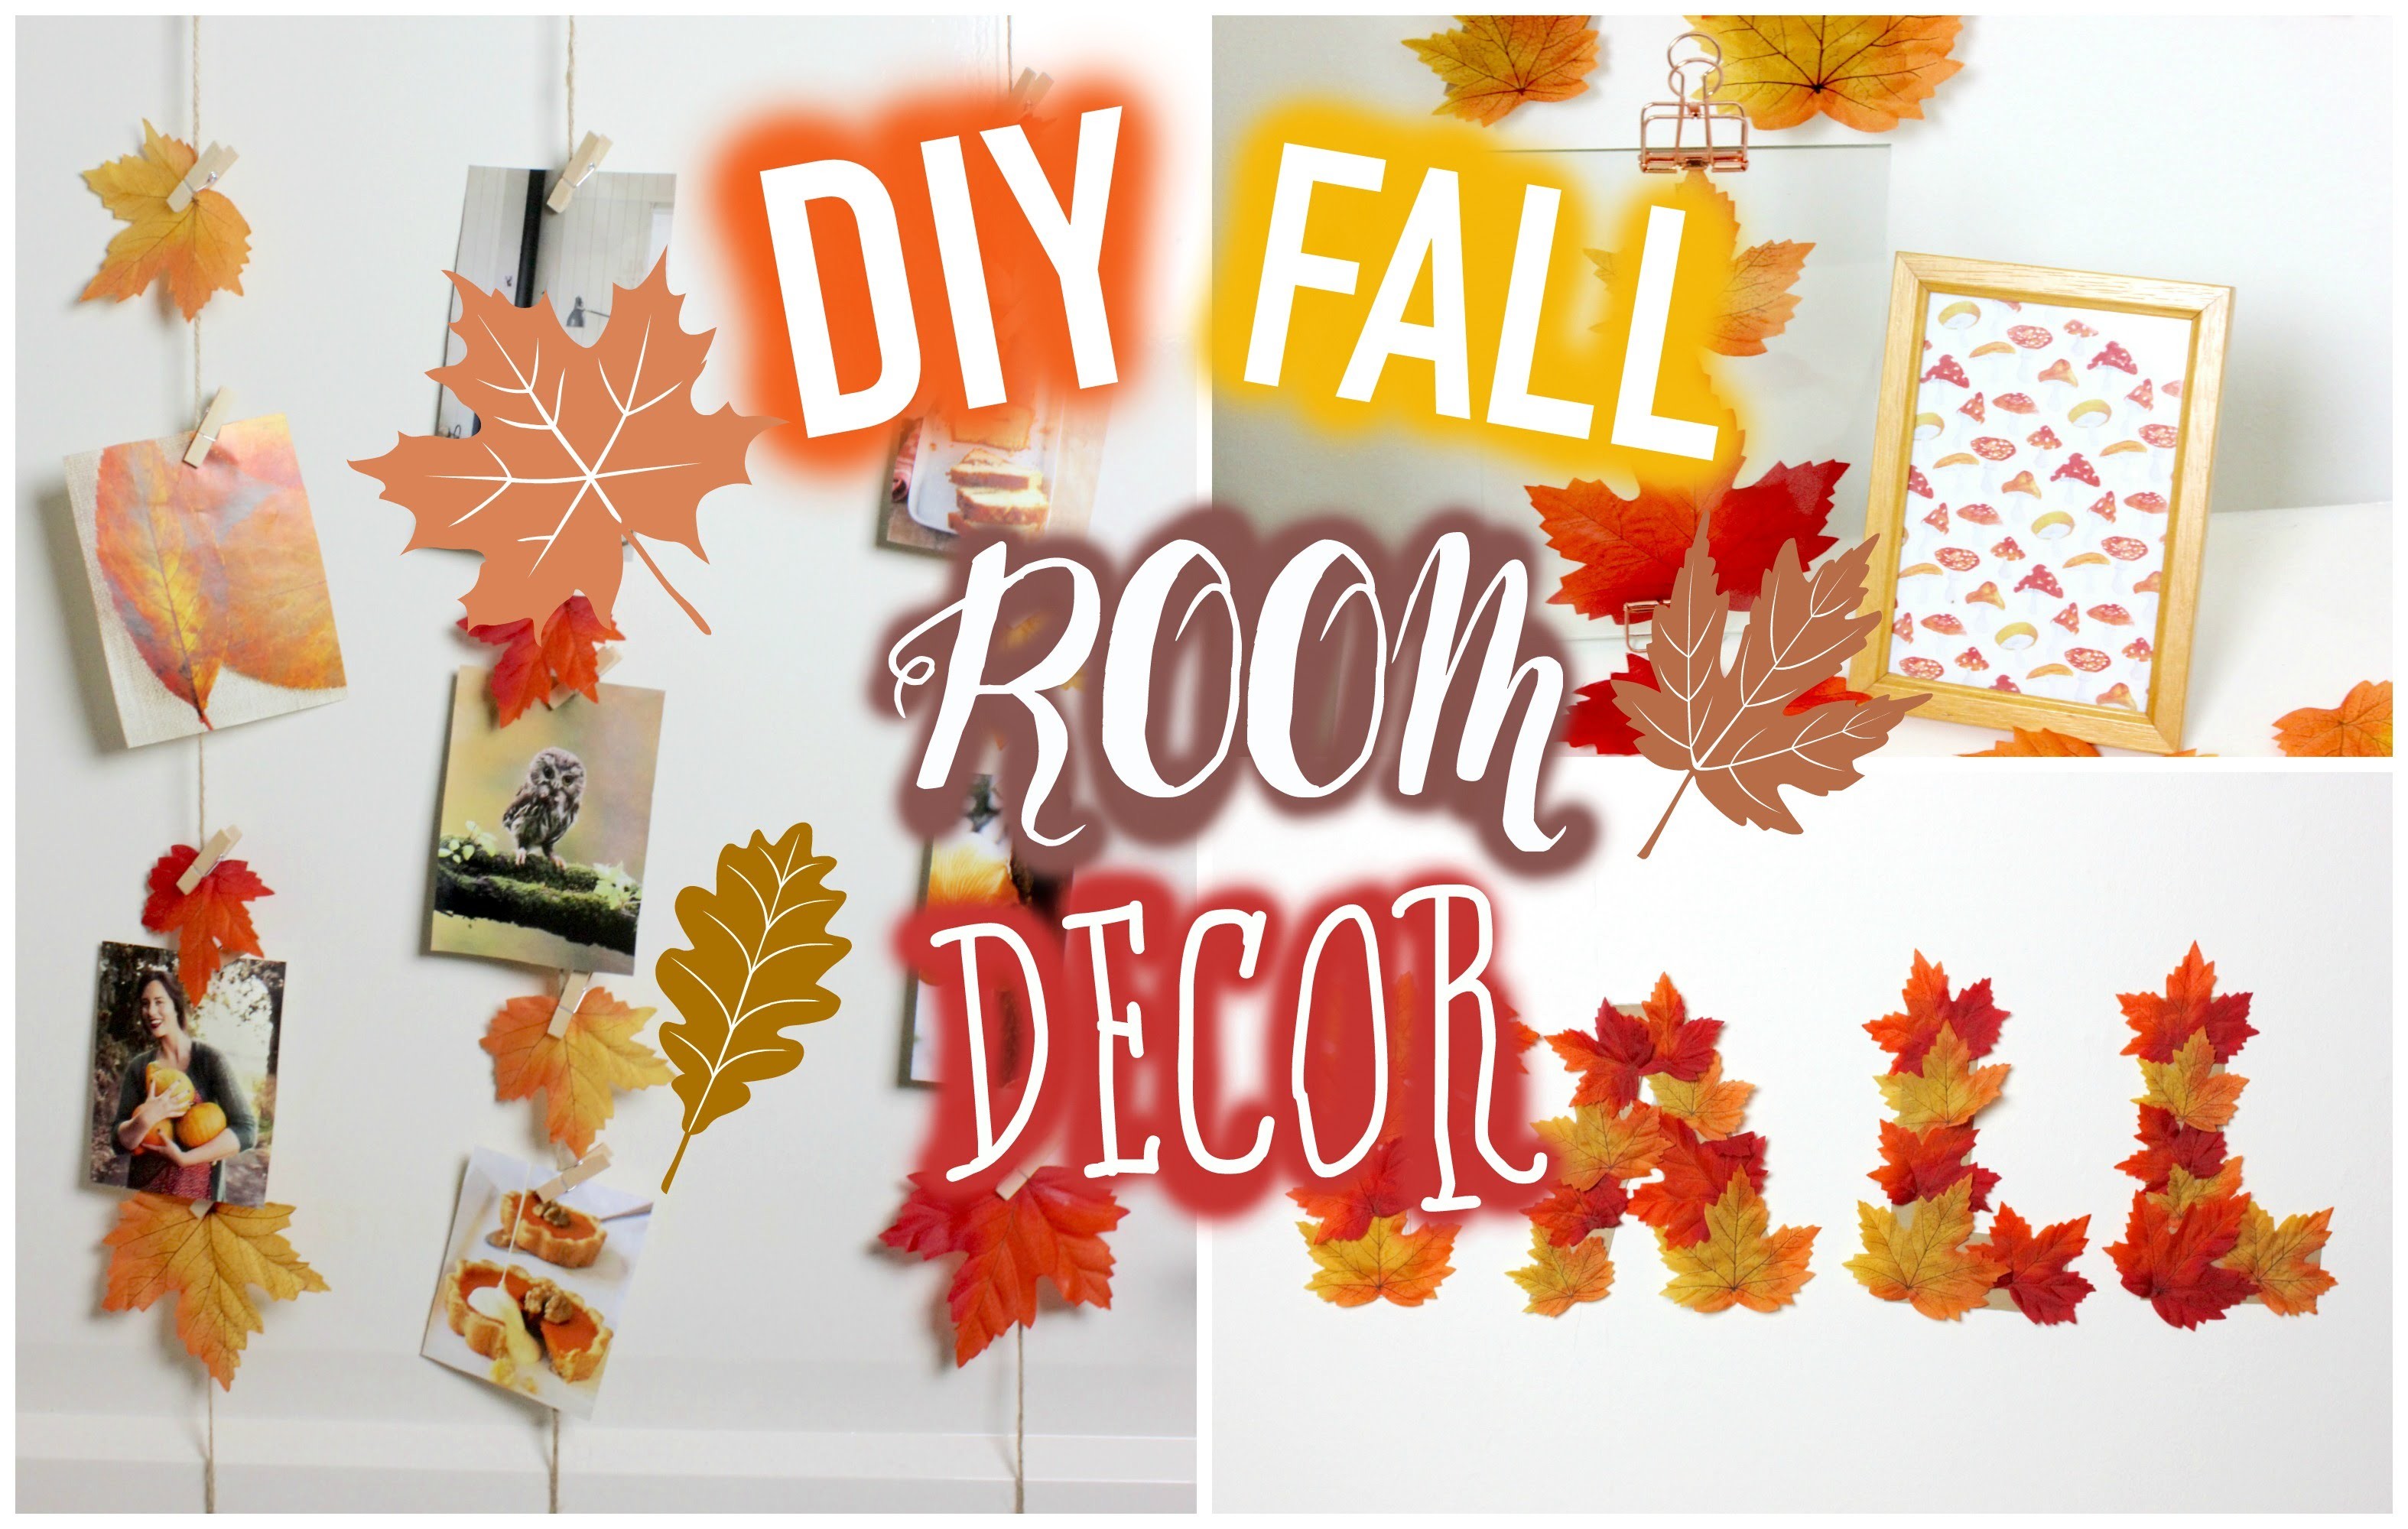 DIY Fall.autumn tumblr room decor!. Muchabless